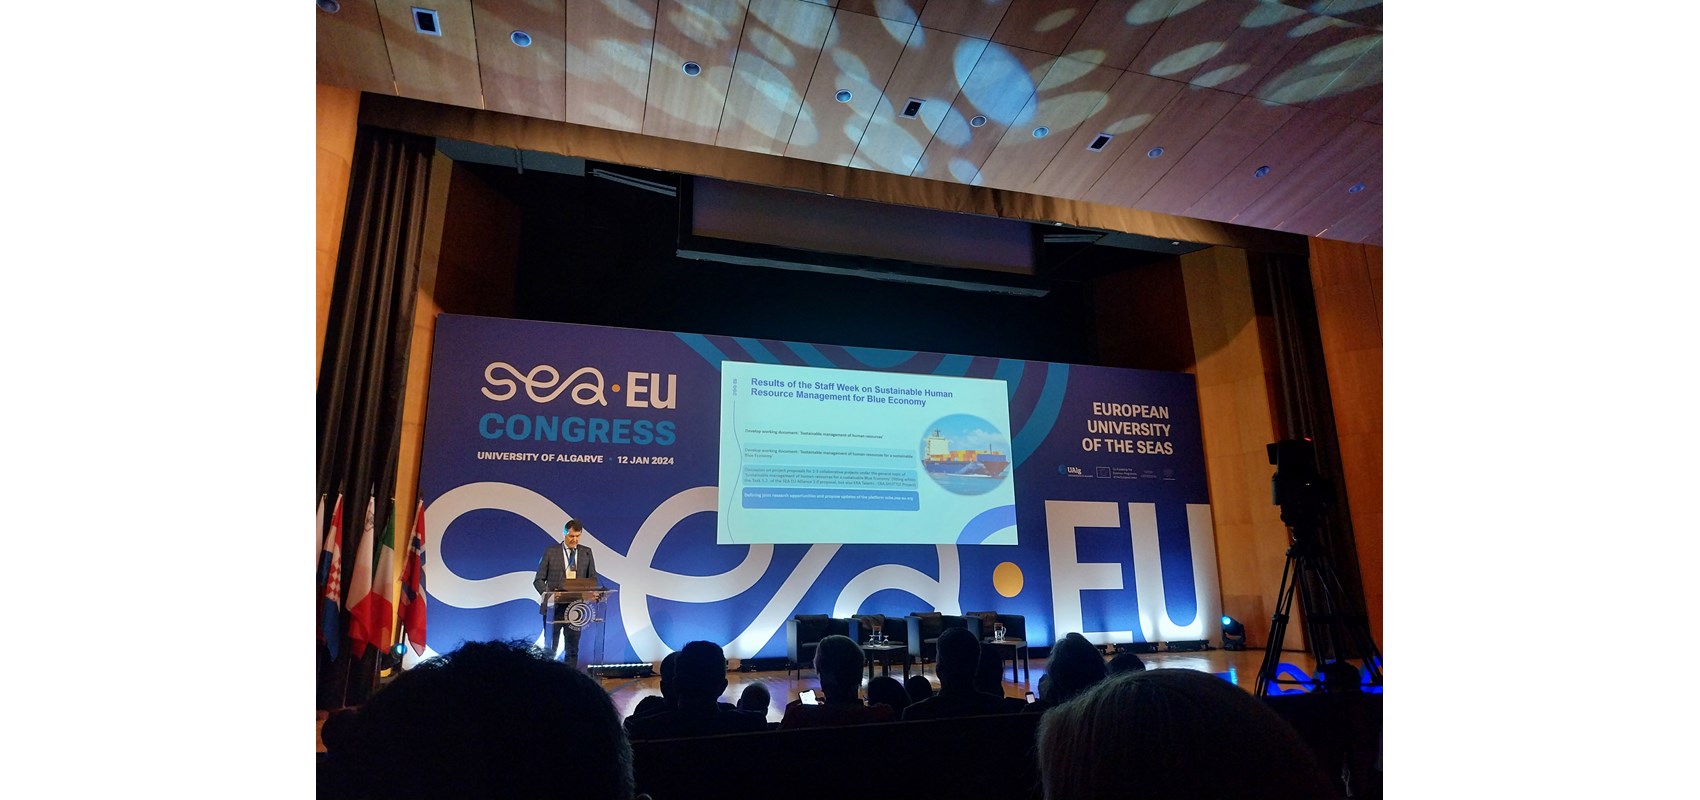 SEA-EU Congress at University of Algarve